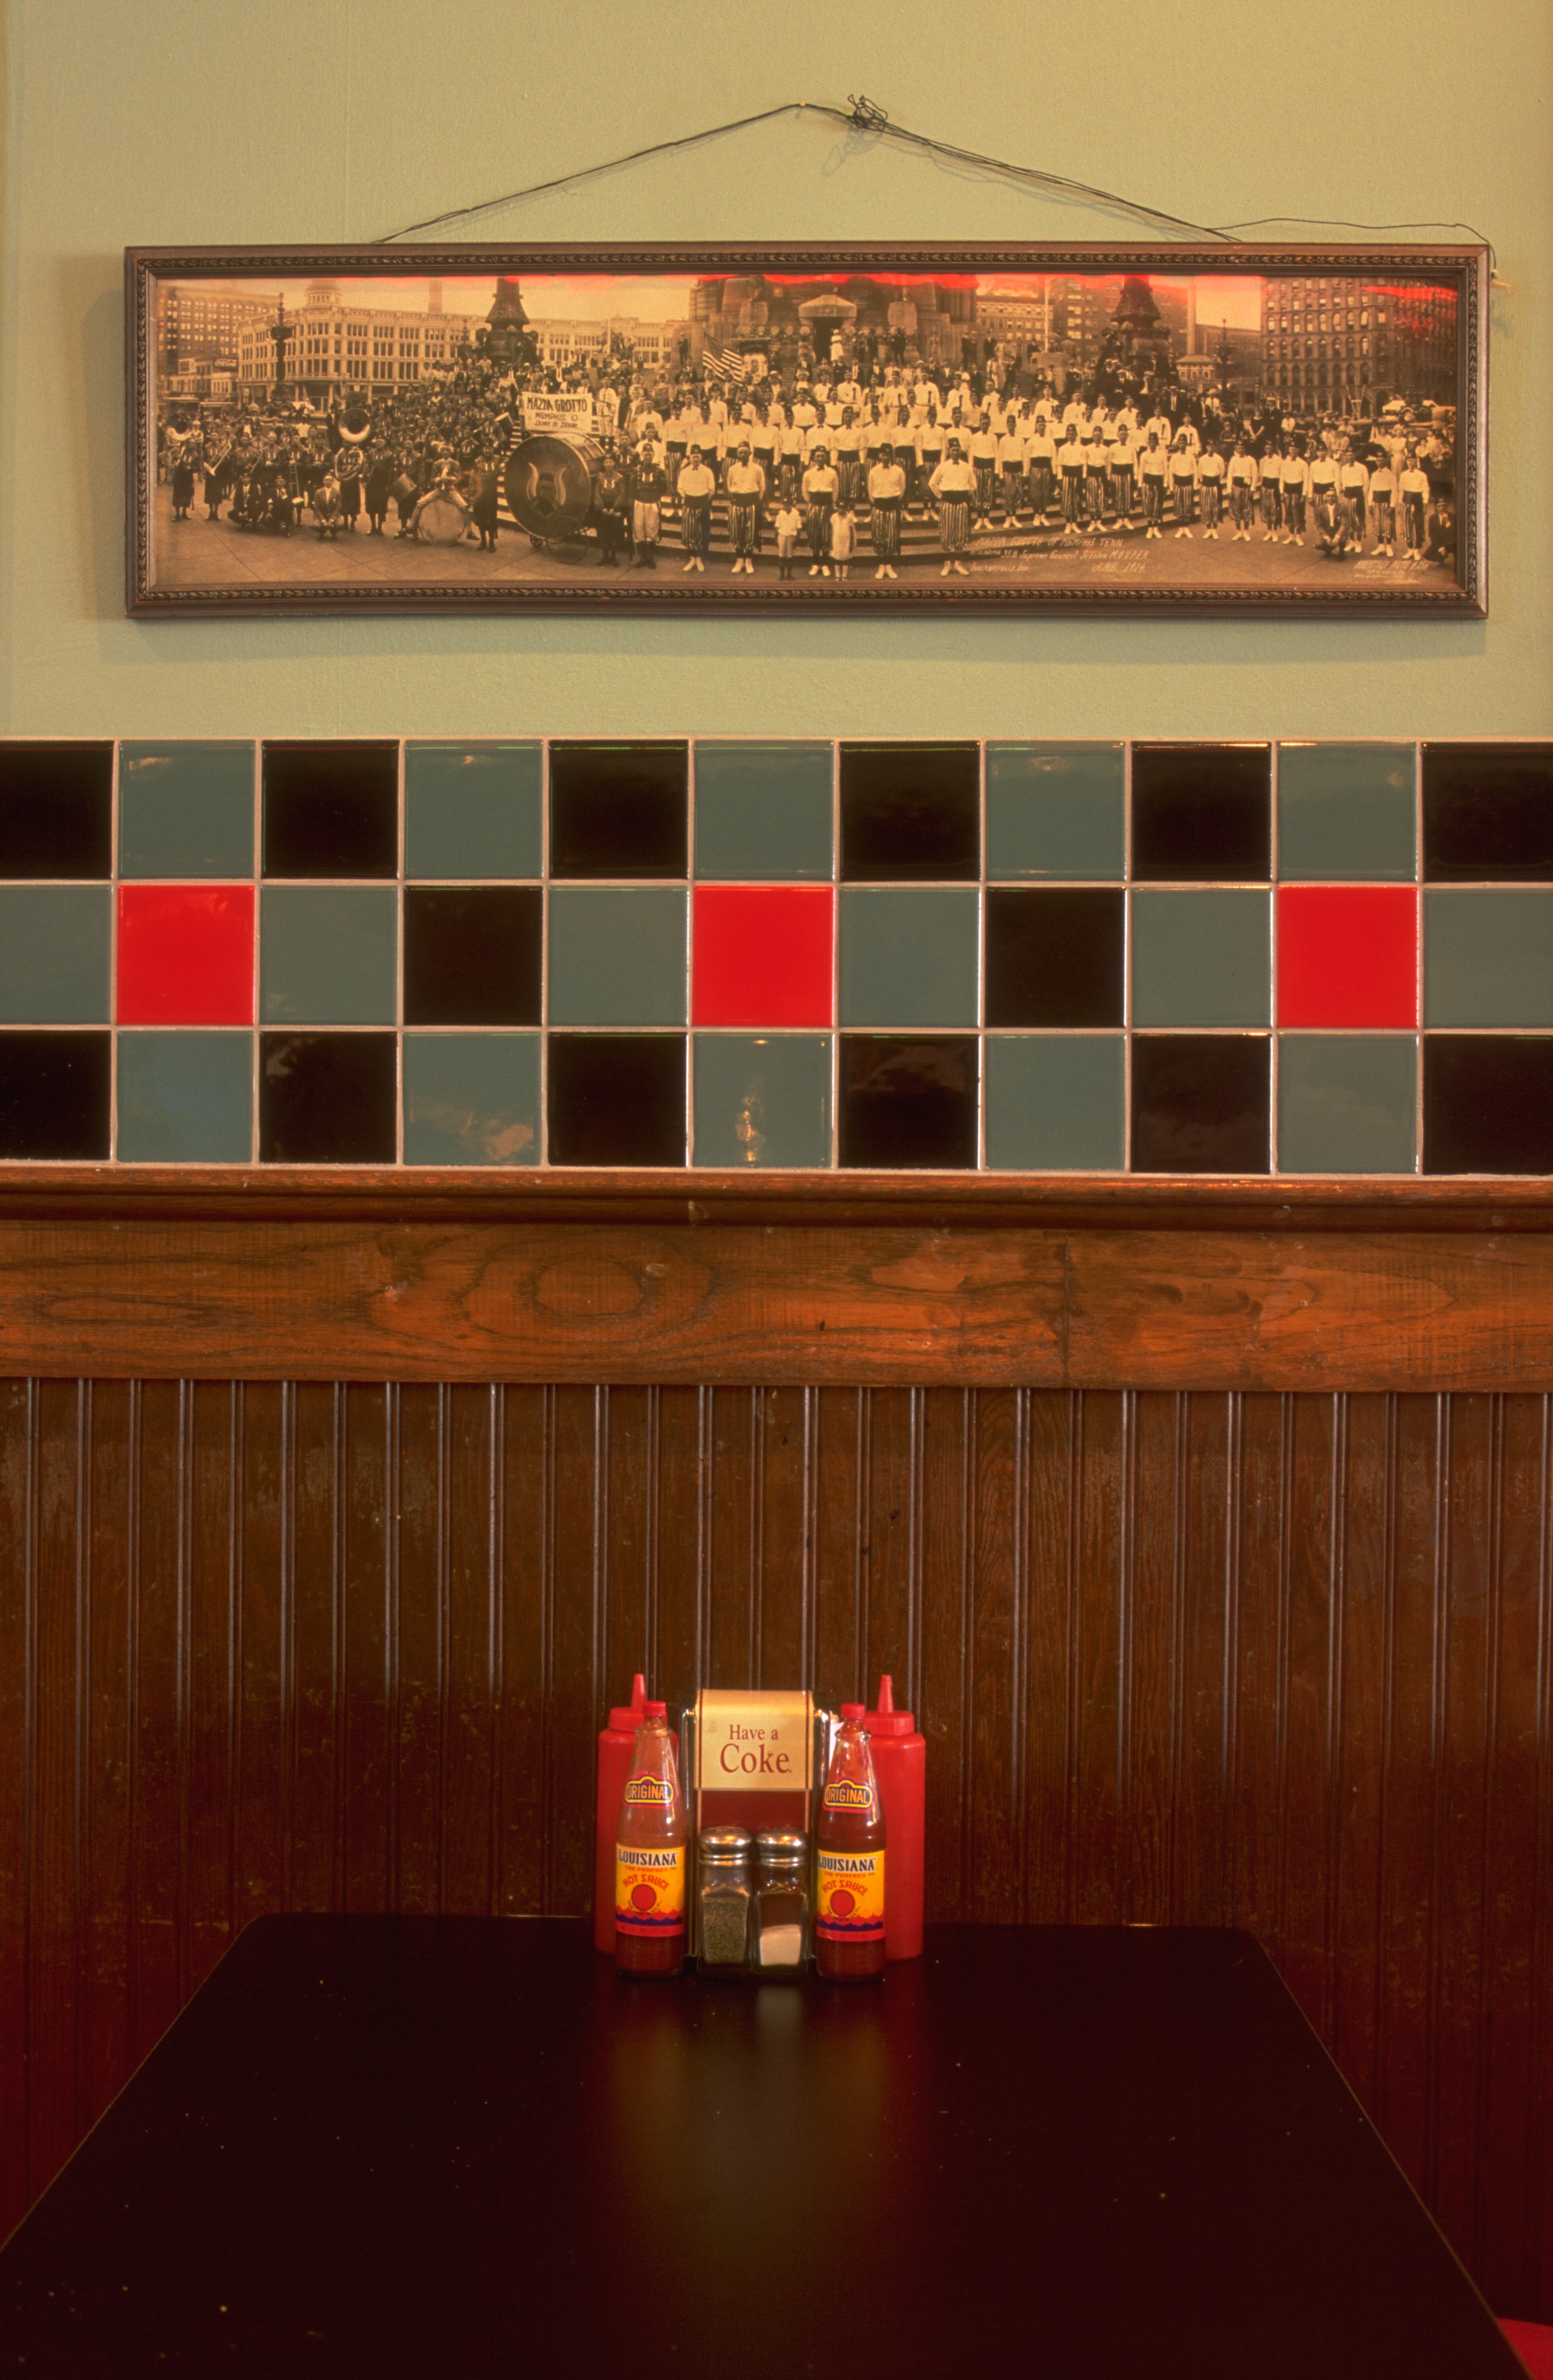  Dyer’s Burgers interior  Restaurant interior design by Chuck Mitchell  Beale Street Memphis, Tennessee 